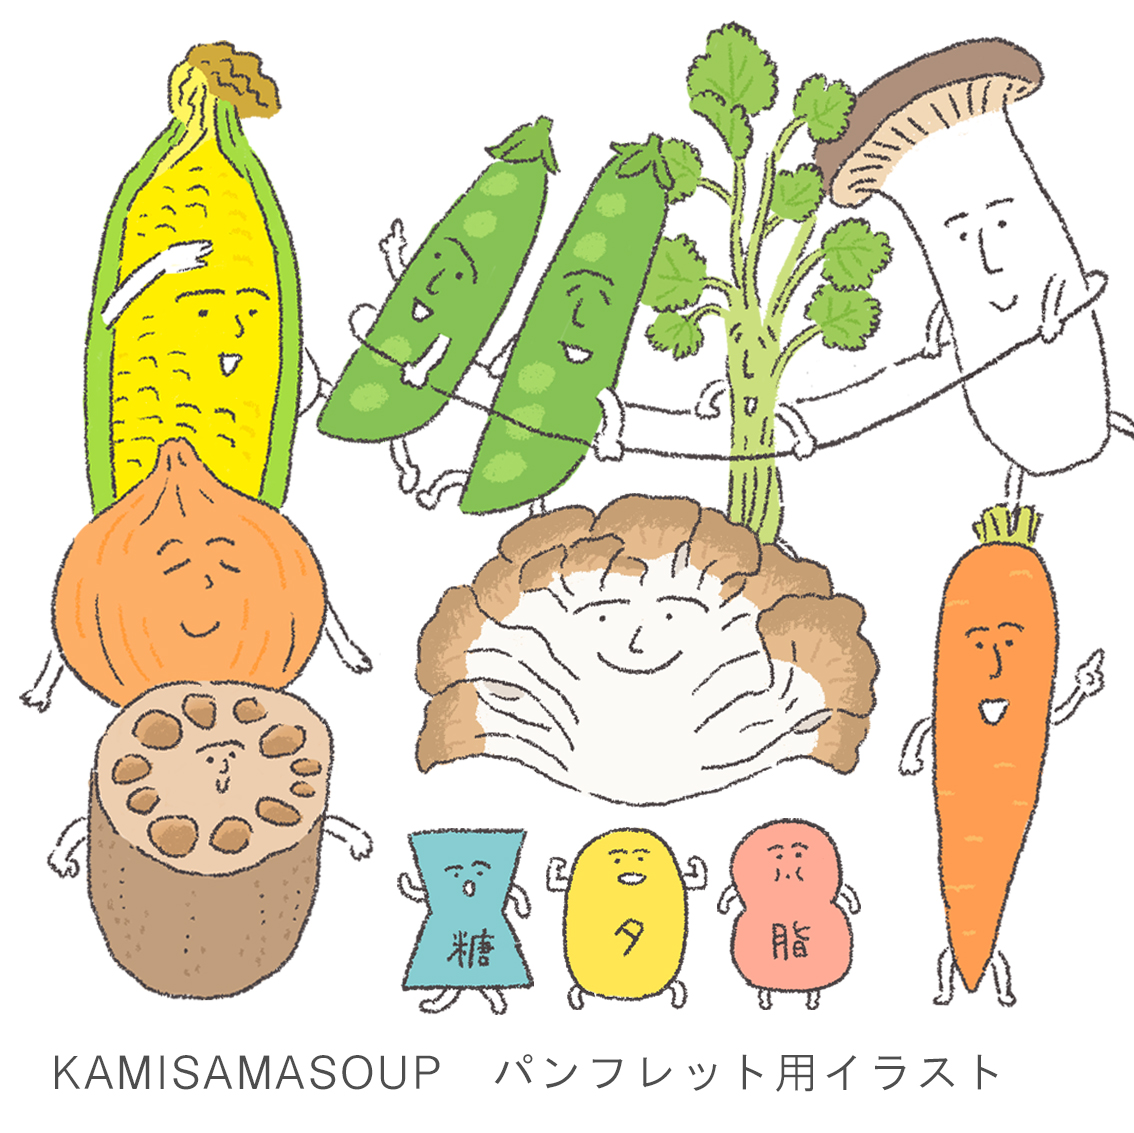 KAMISAMASOUP 神様スープ　パンフレット用イラスト